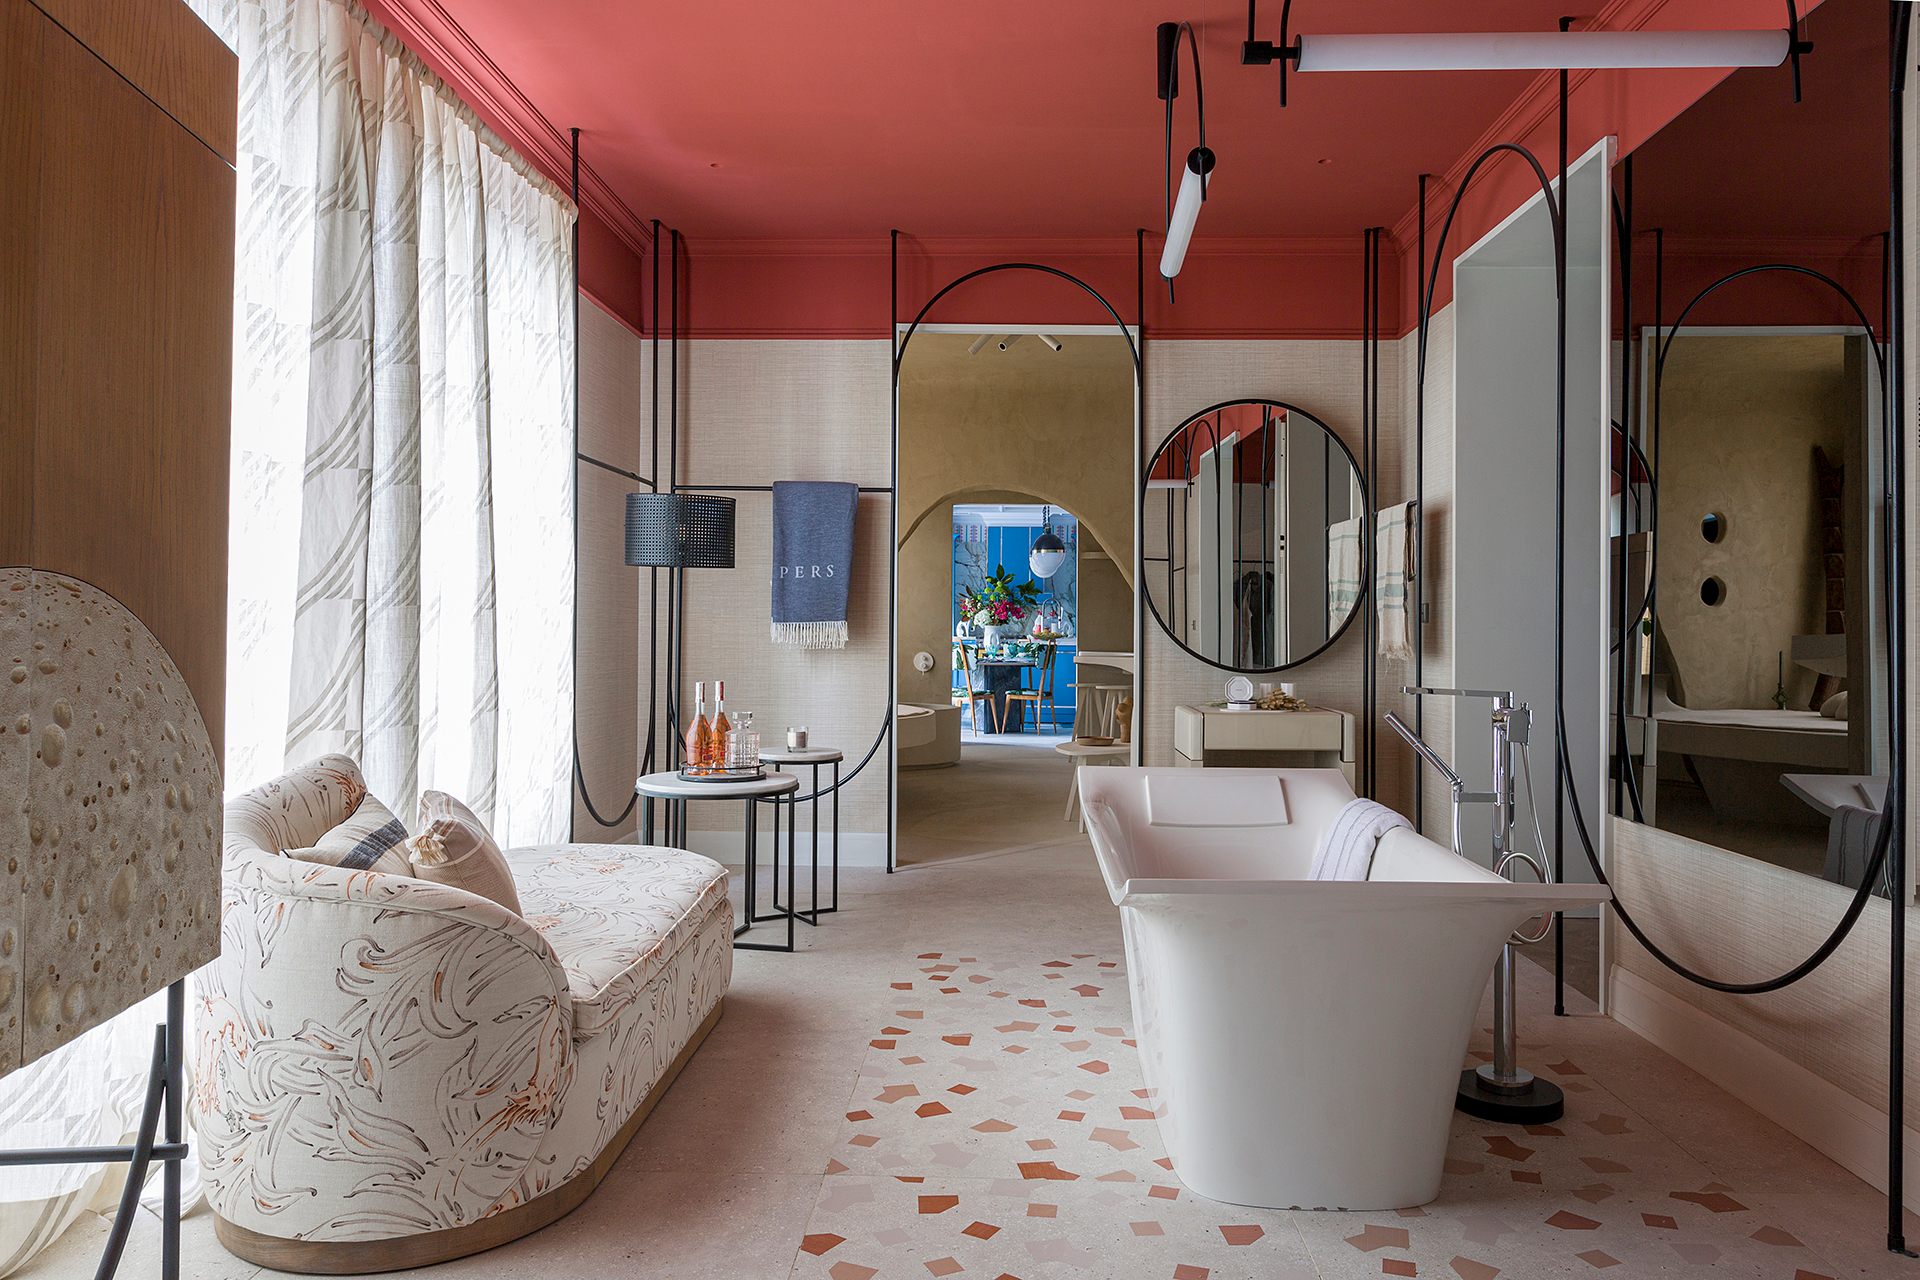 Image of 13. Bajas casa decor 2022 espacio jacob delafon u interior design cuarto de bano01 in A journey to the best of Art Deco Paris through a bathroom - Cosentino